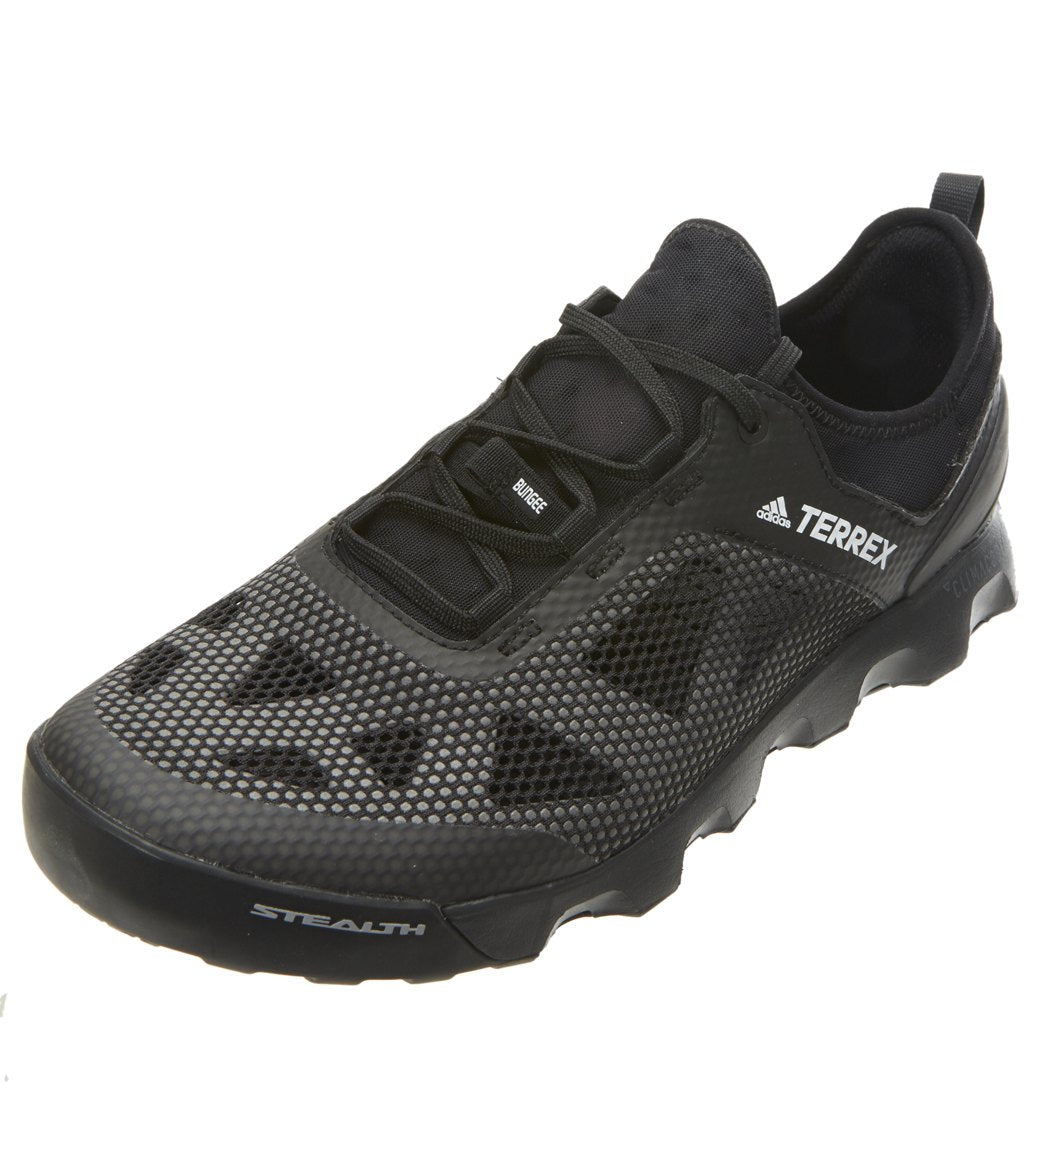 Adidas Men's Terrex Climacool Voyager Aqua Water Shoe at